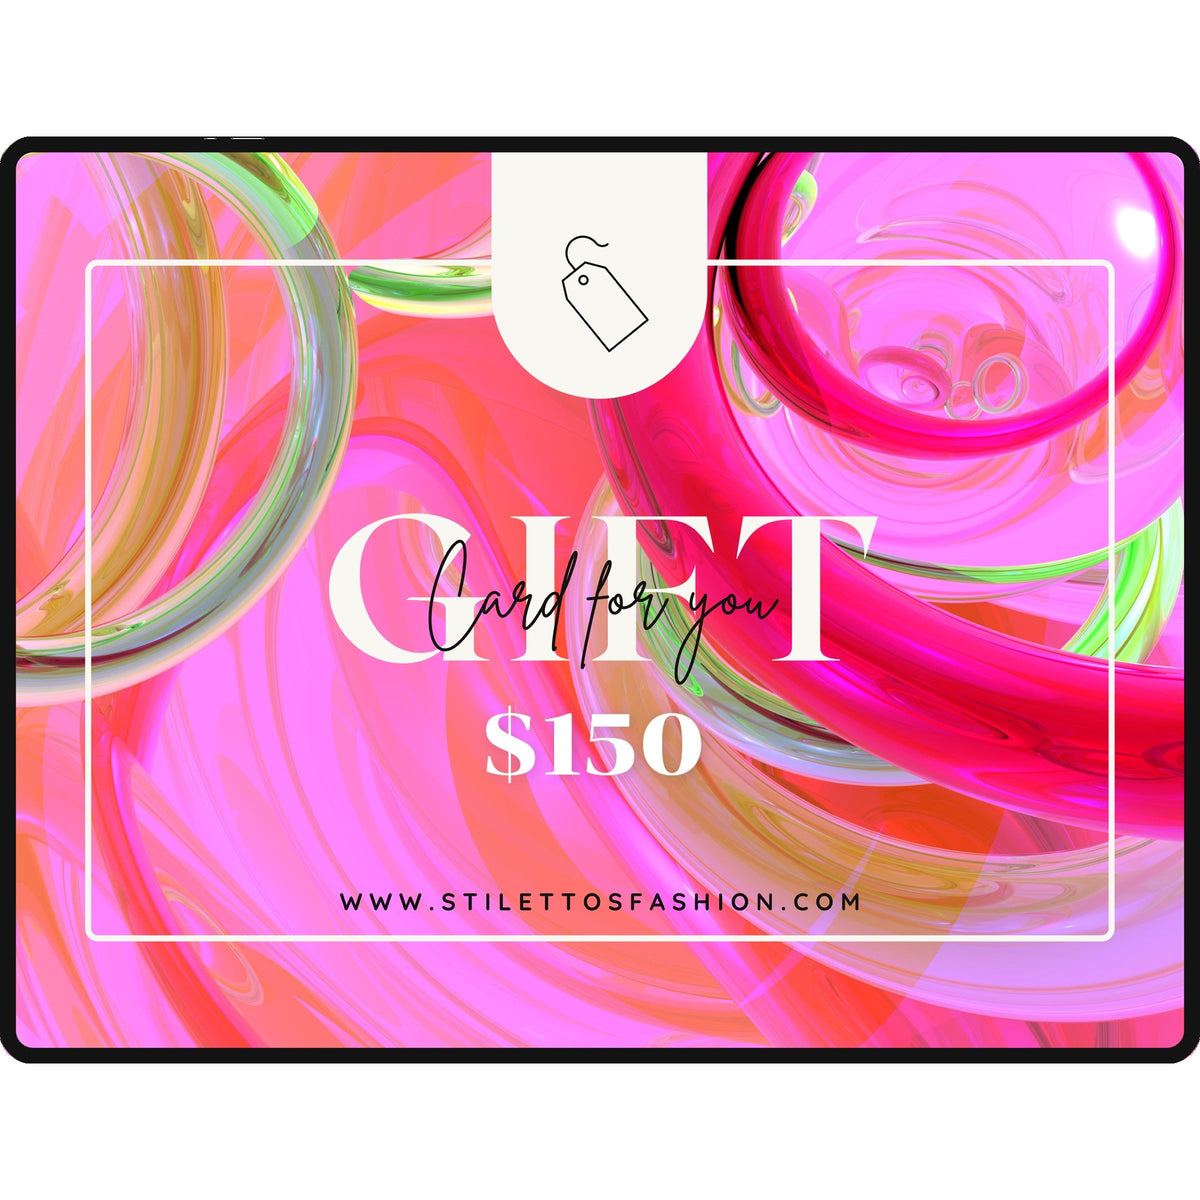 Gift Card $150 Stilettoskop - "Where The Pretty Girls Shop"